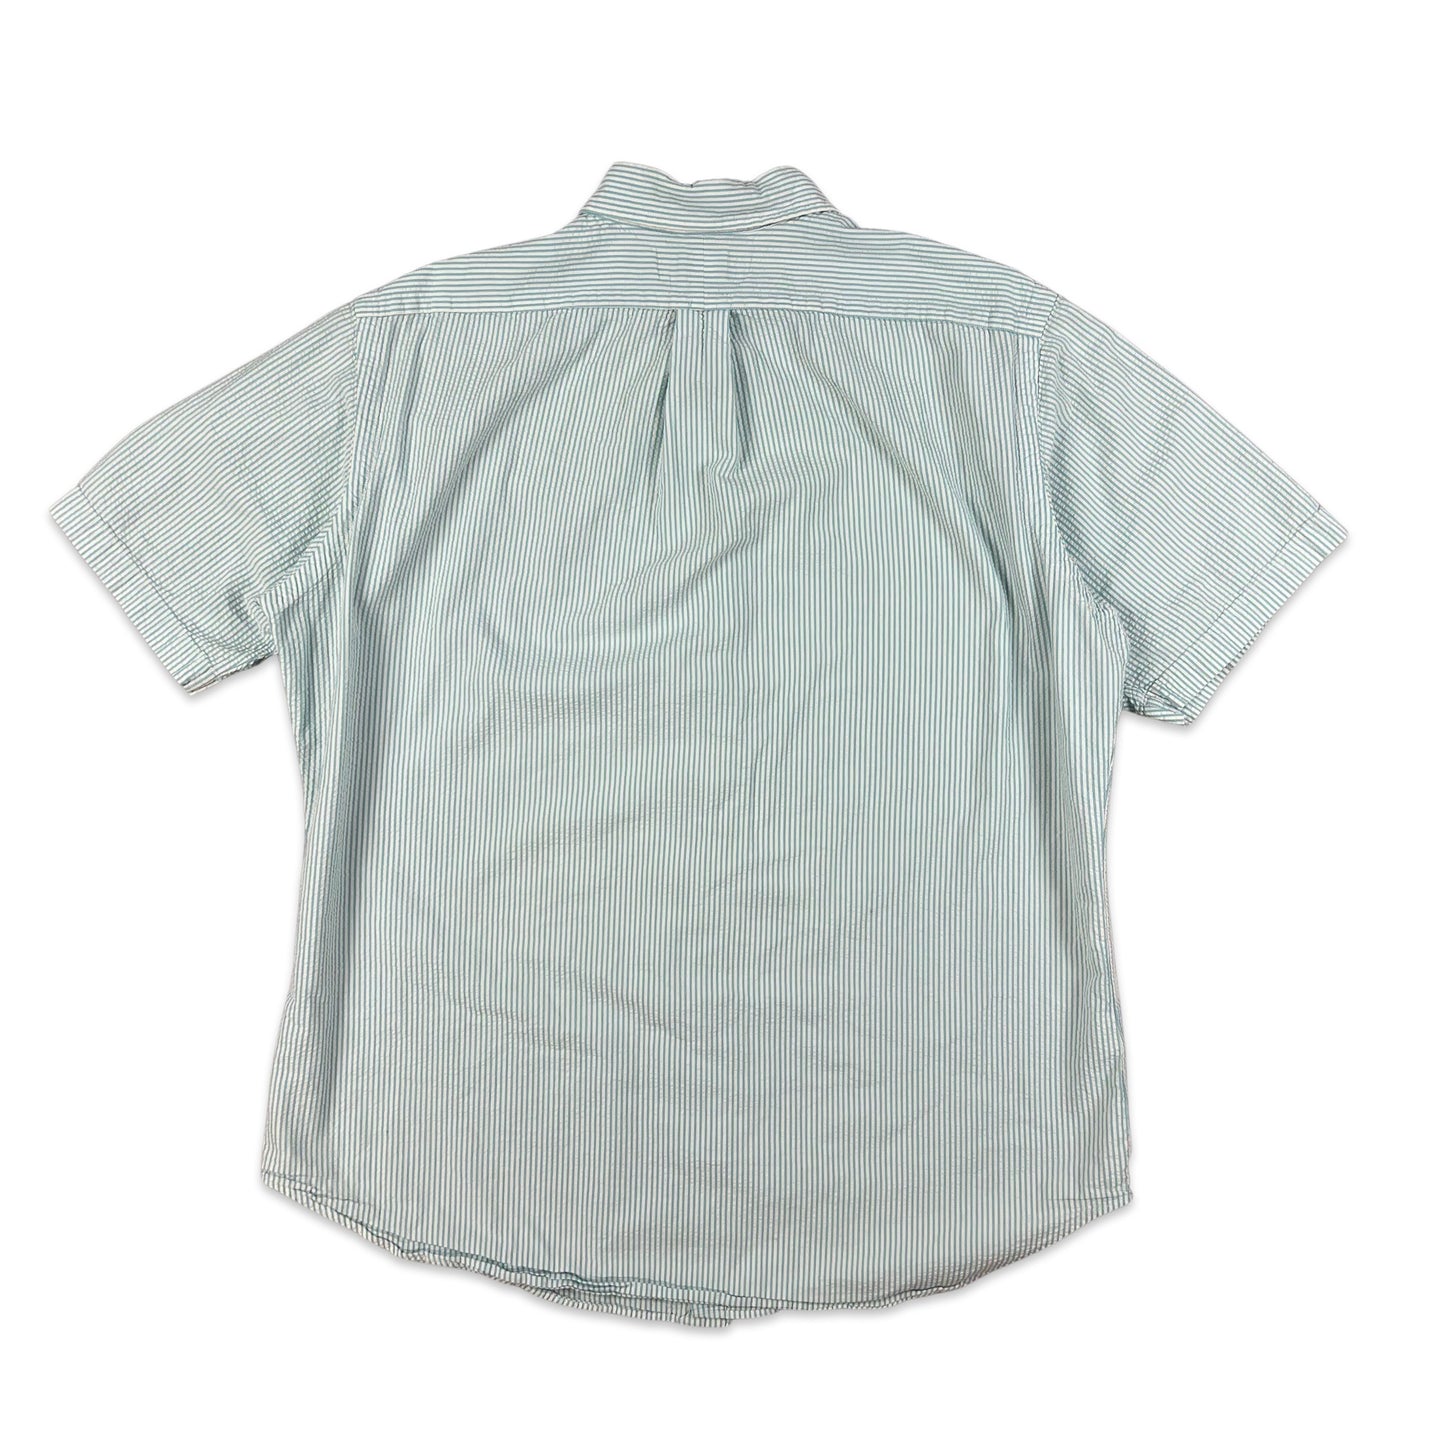 00s Vintage Ralph Lauren Stripe Shirt Blue White L XL